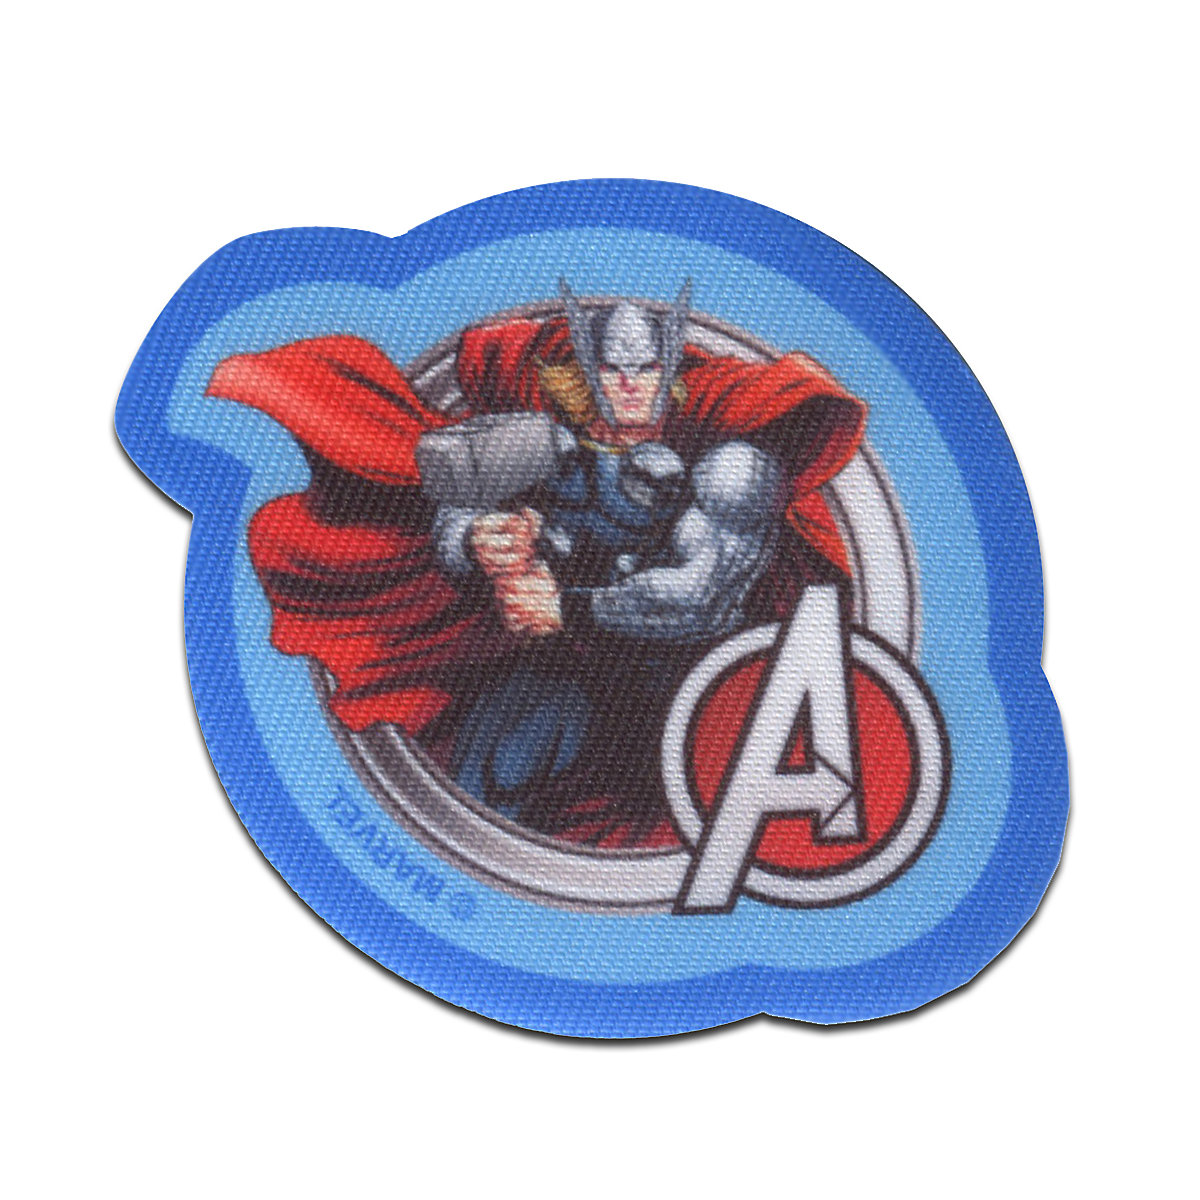 Aufnäher / Bügelbild Marvel Avengers Thor Comic 2 Nähsets für Kinder